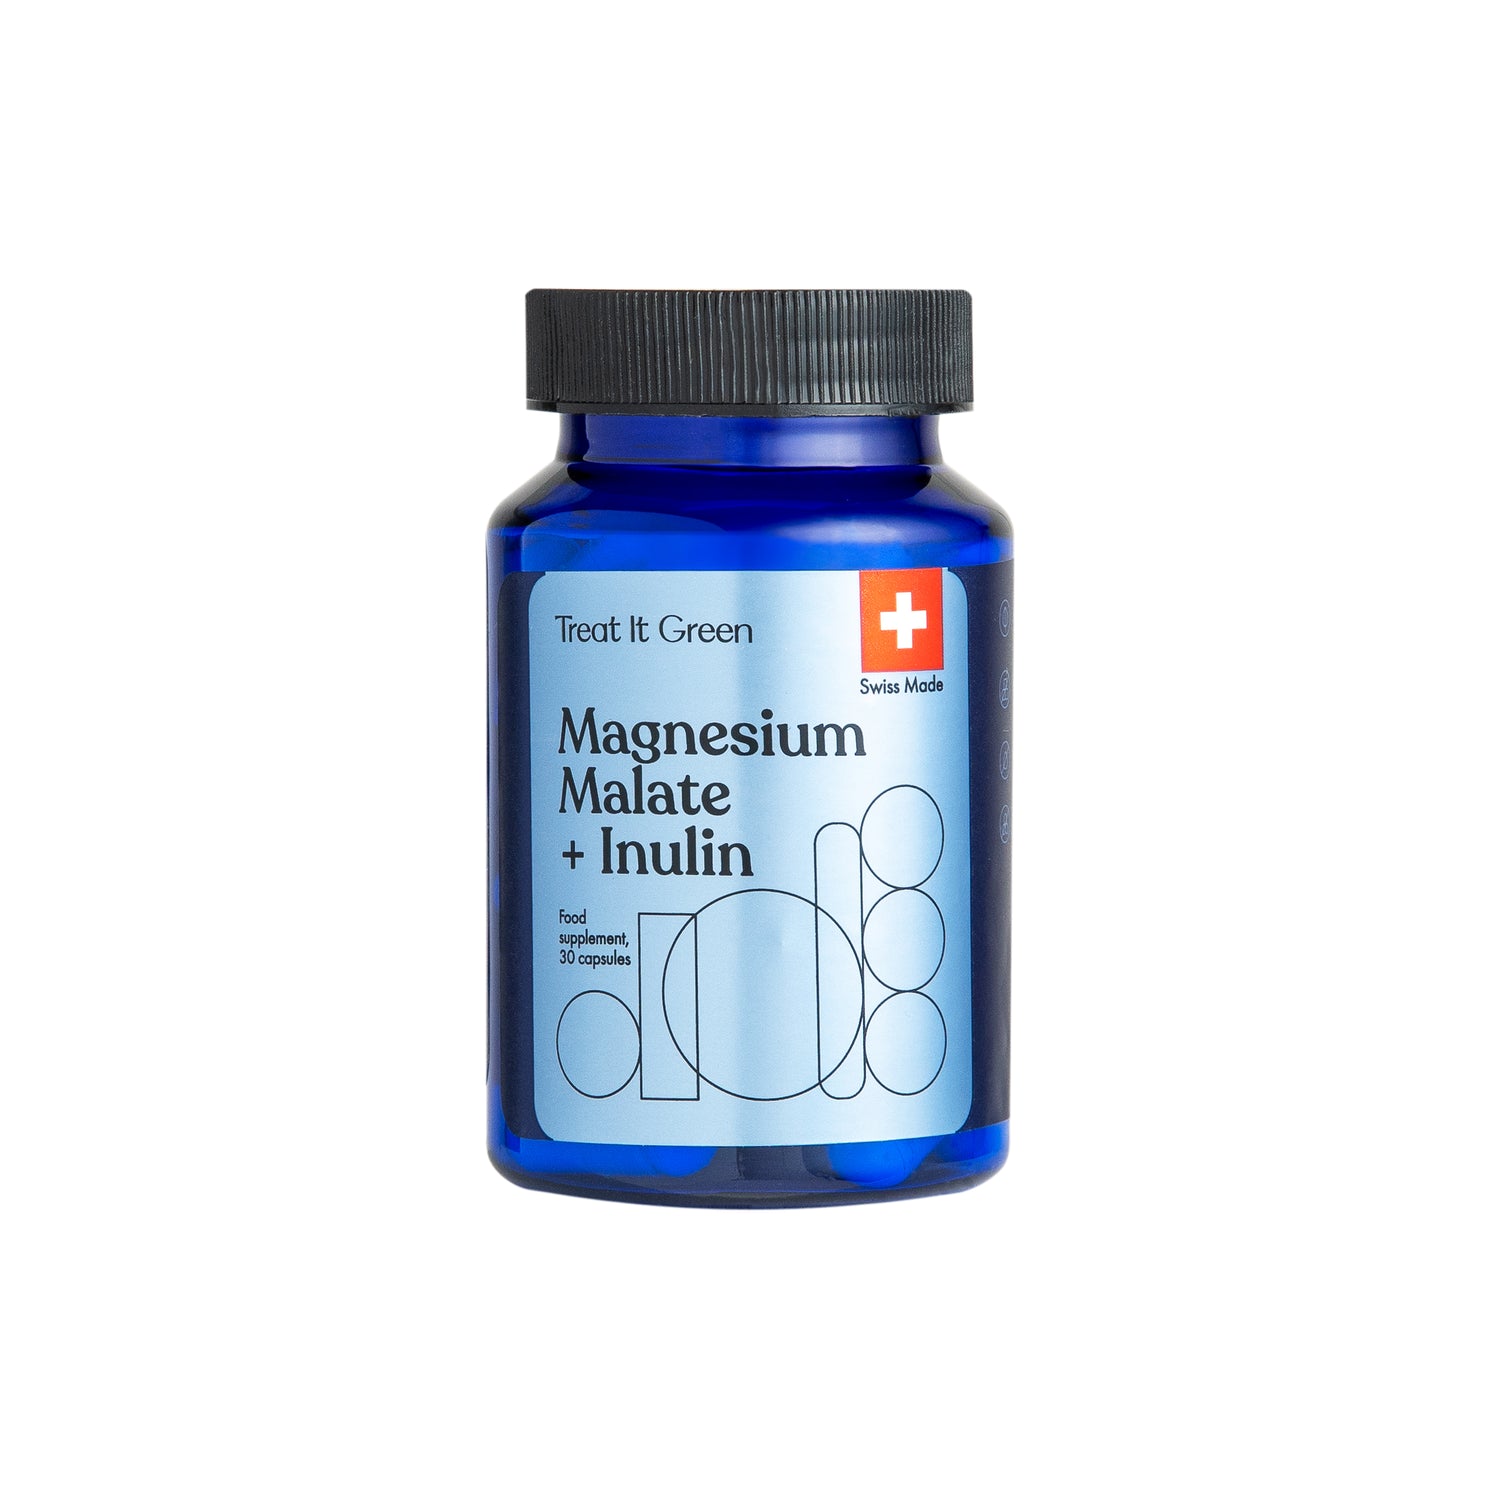 Magnesium malate + Inulin (30 caps)